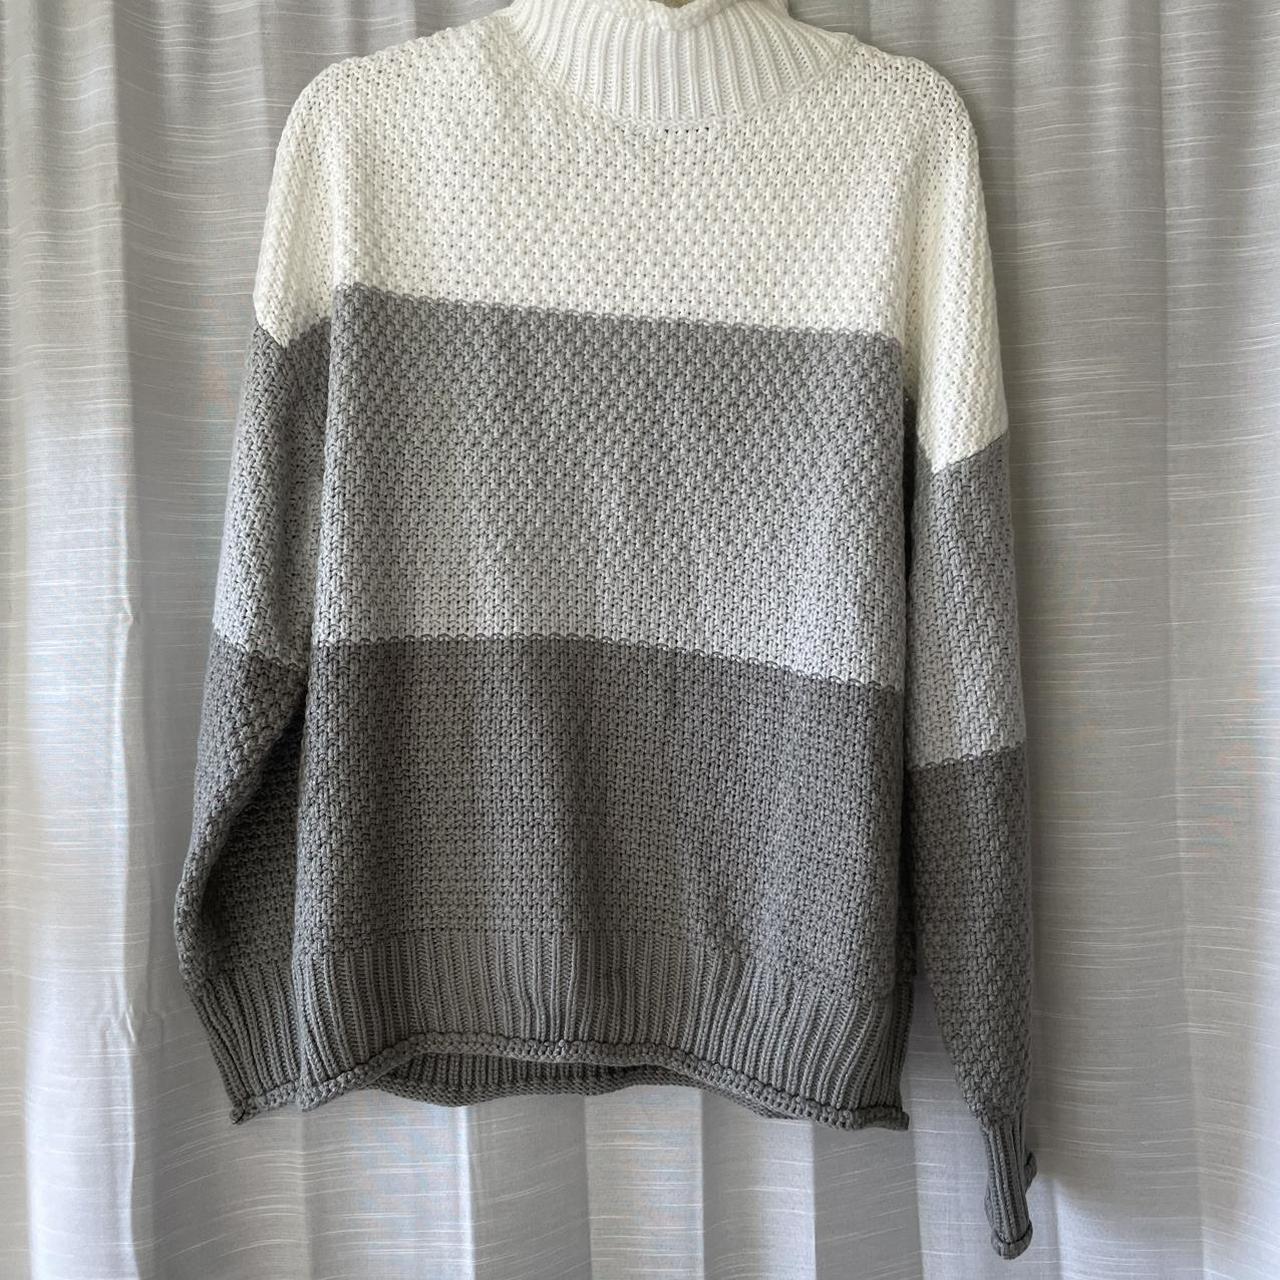 White and Grey Knit Turtleneck Sweater Zesica... - Depop